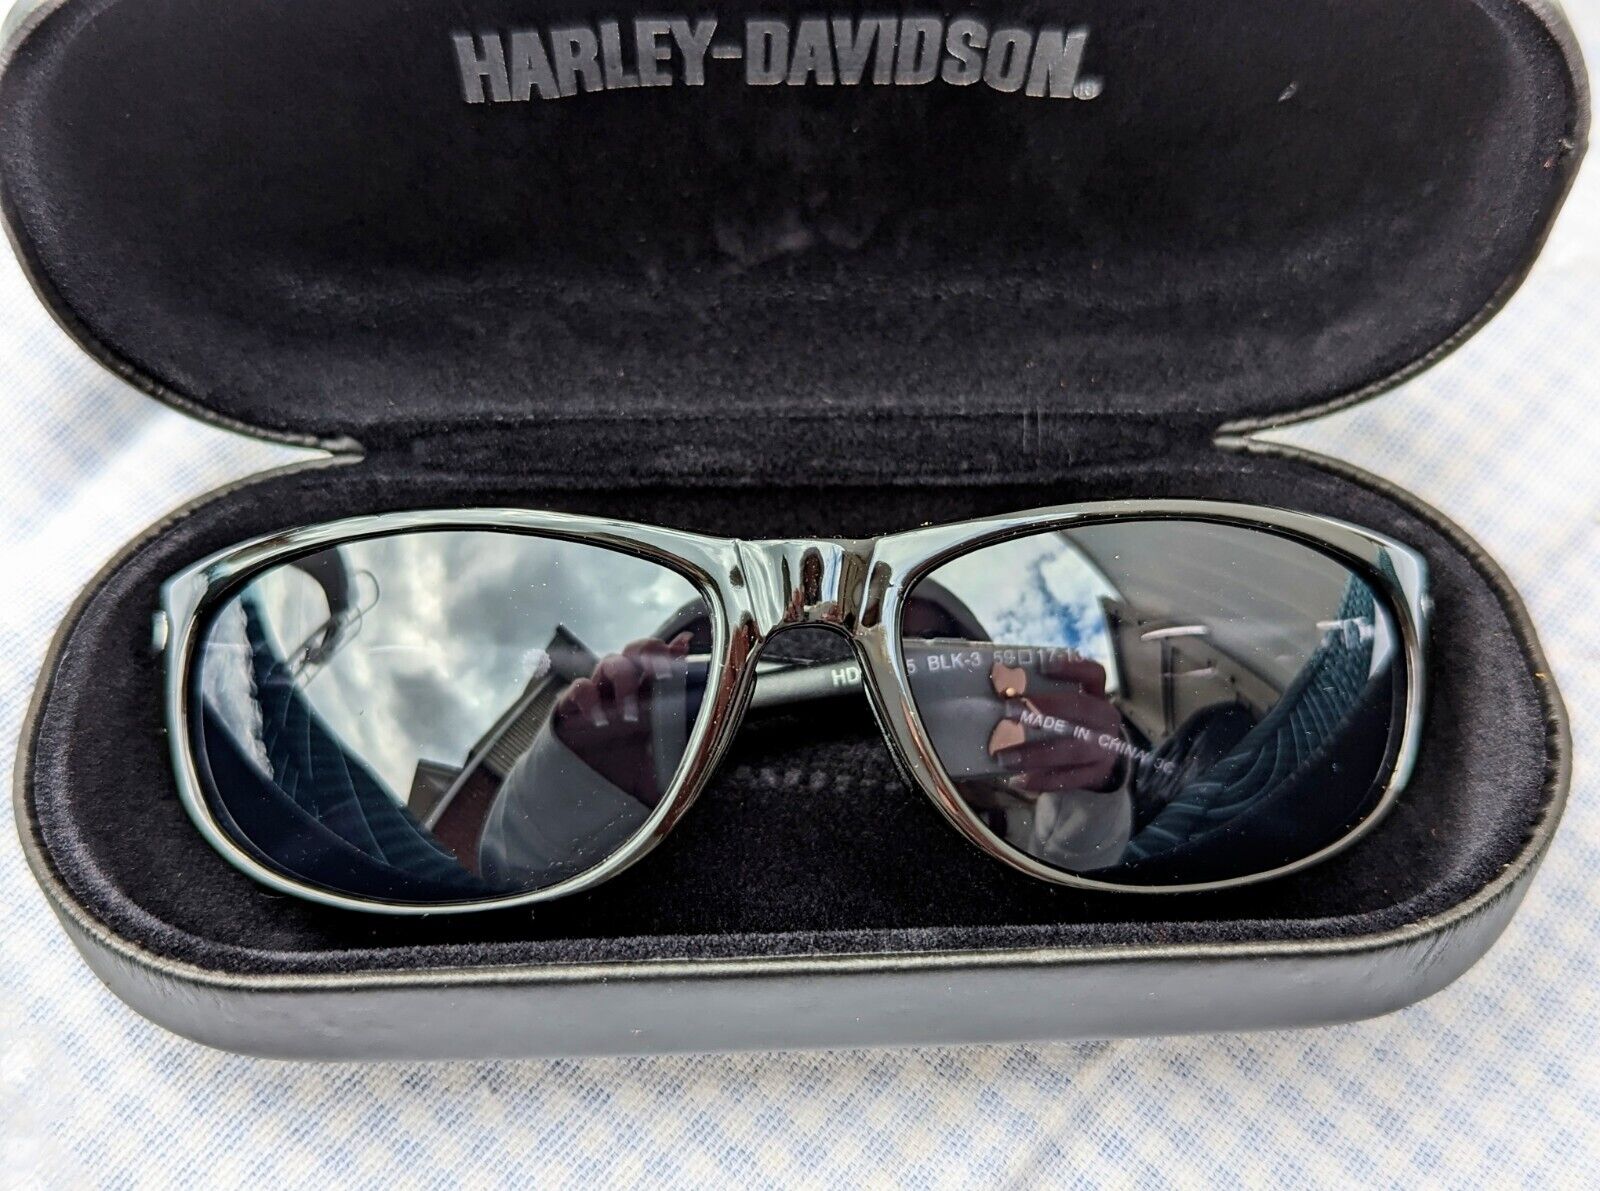 NEW Avon Unisex Harley Davidson Sunglasses with Hard Case